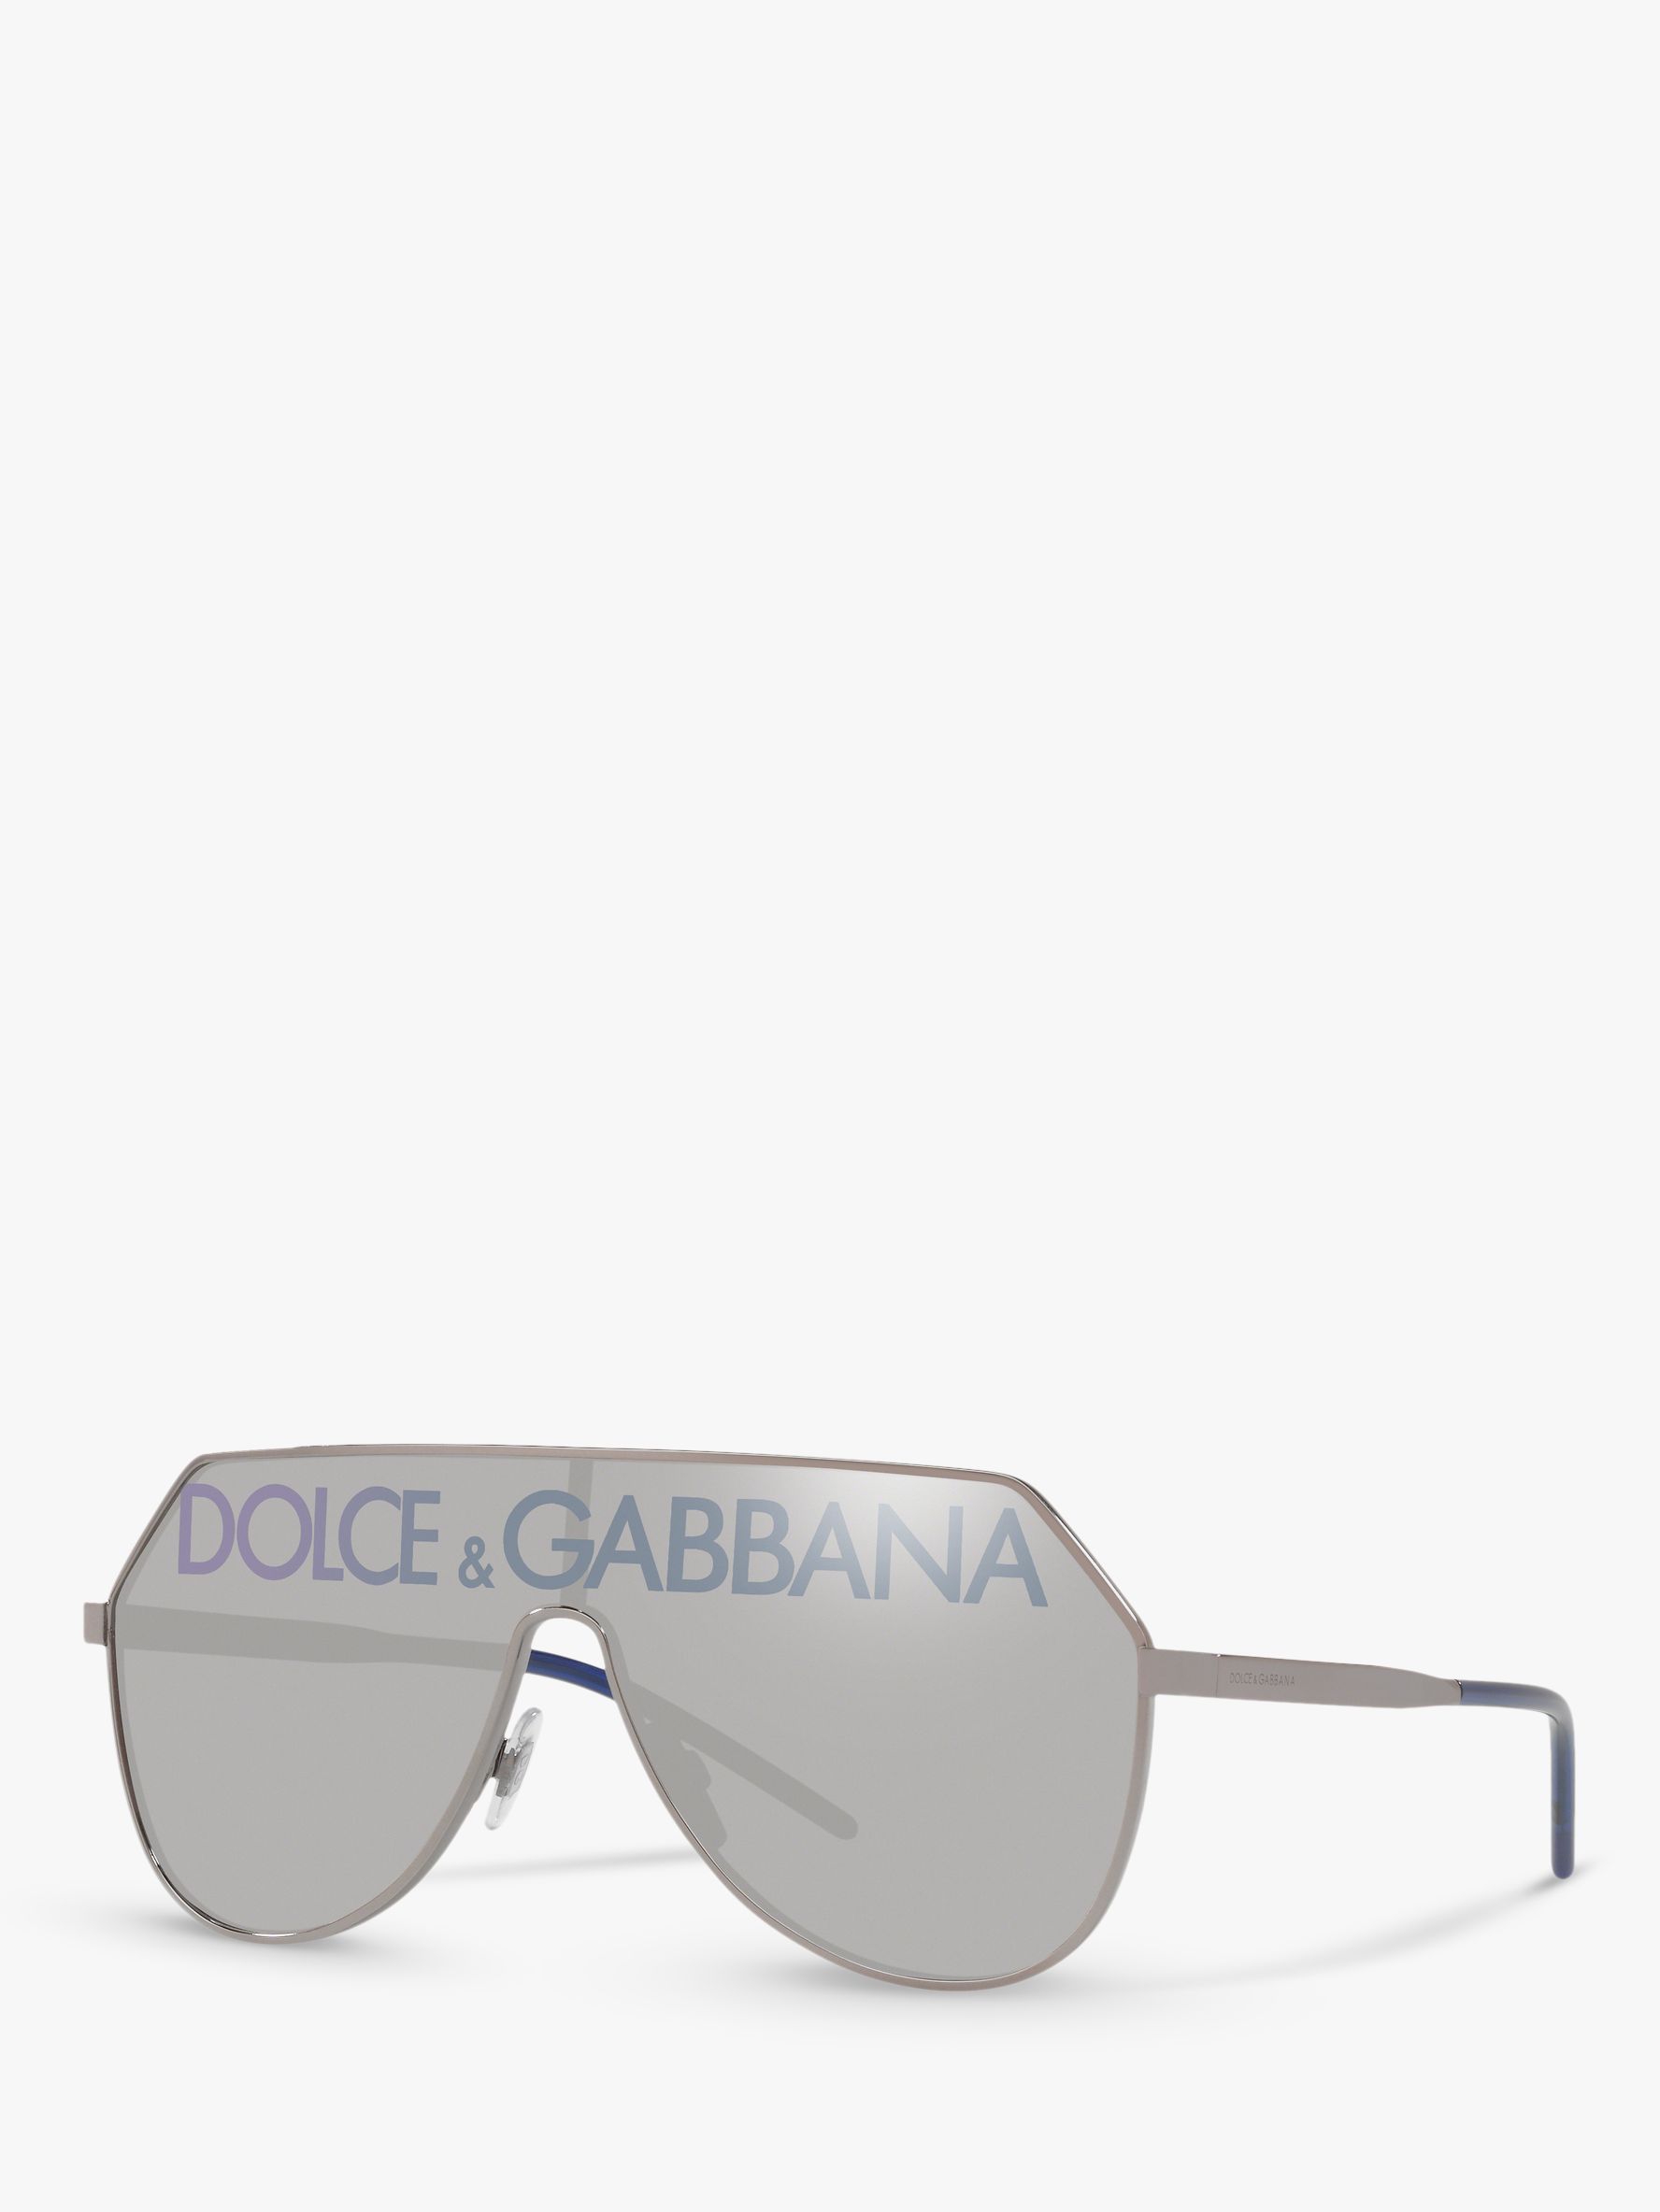 dolce & gabbana mens aviator sunglasses